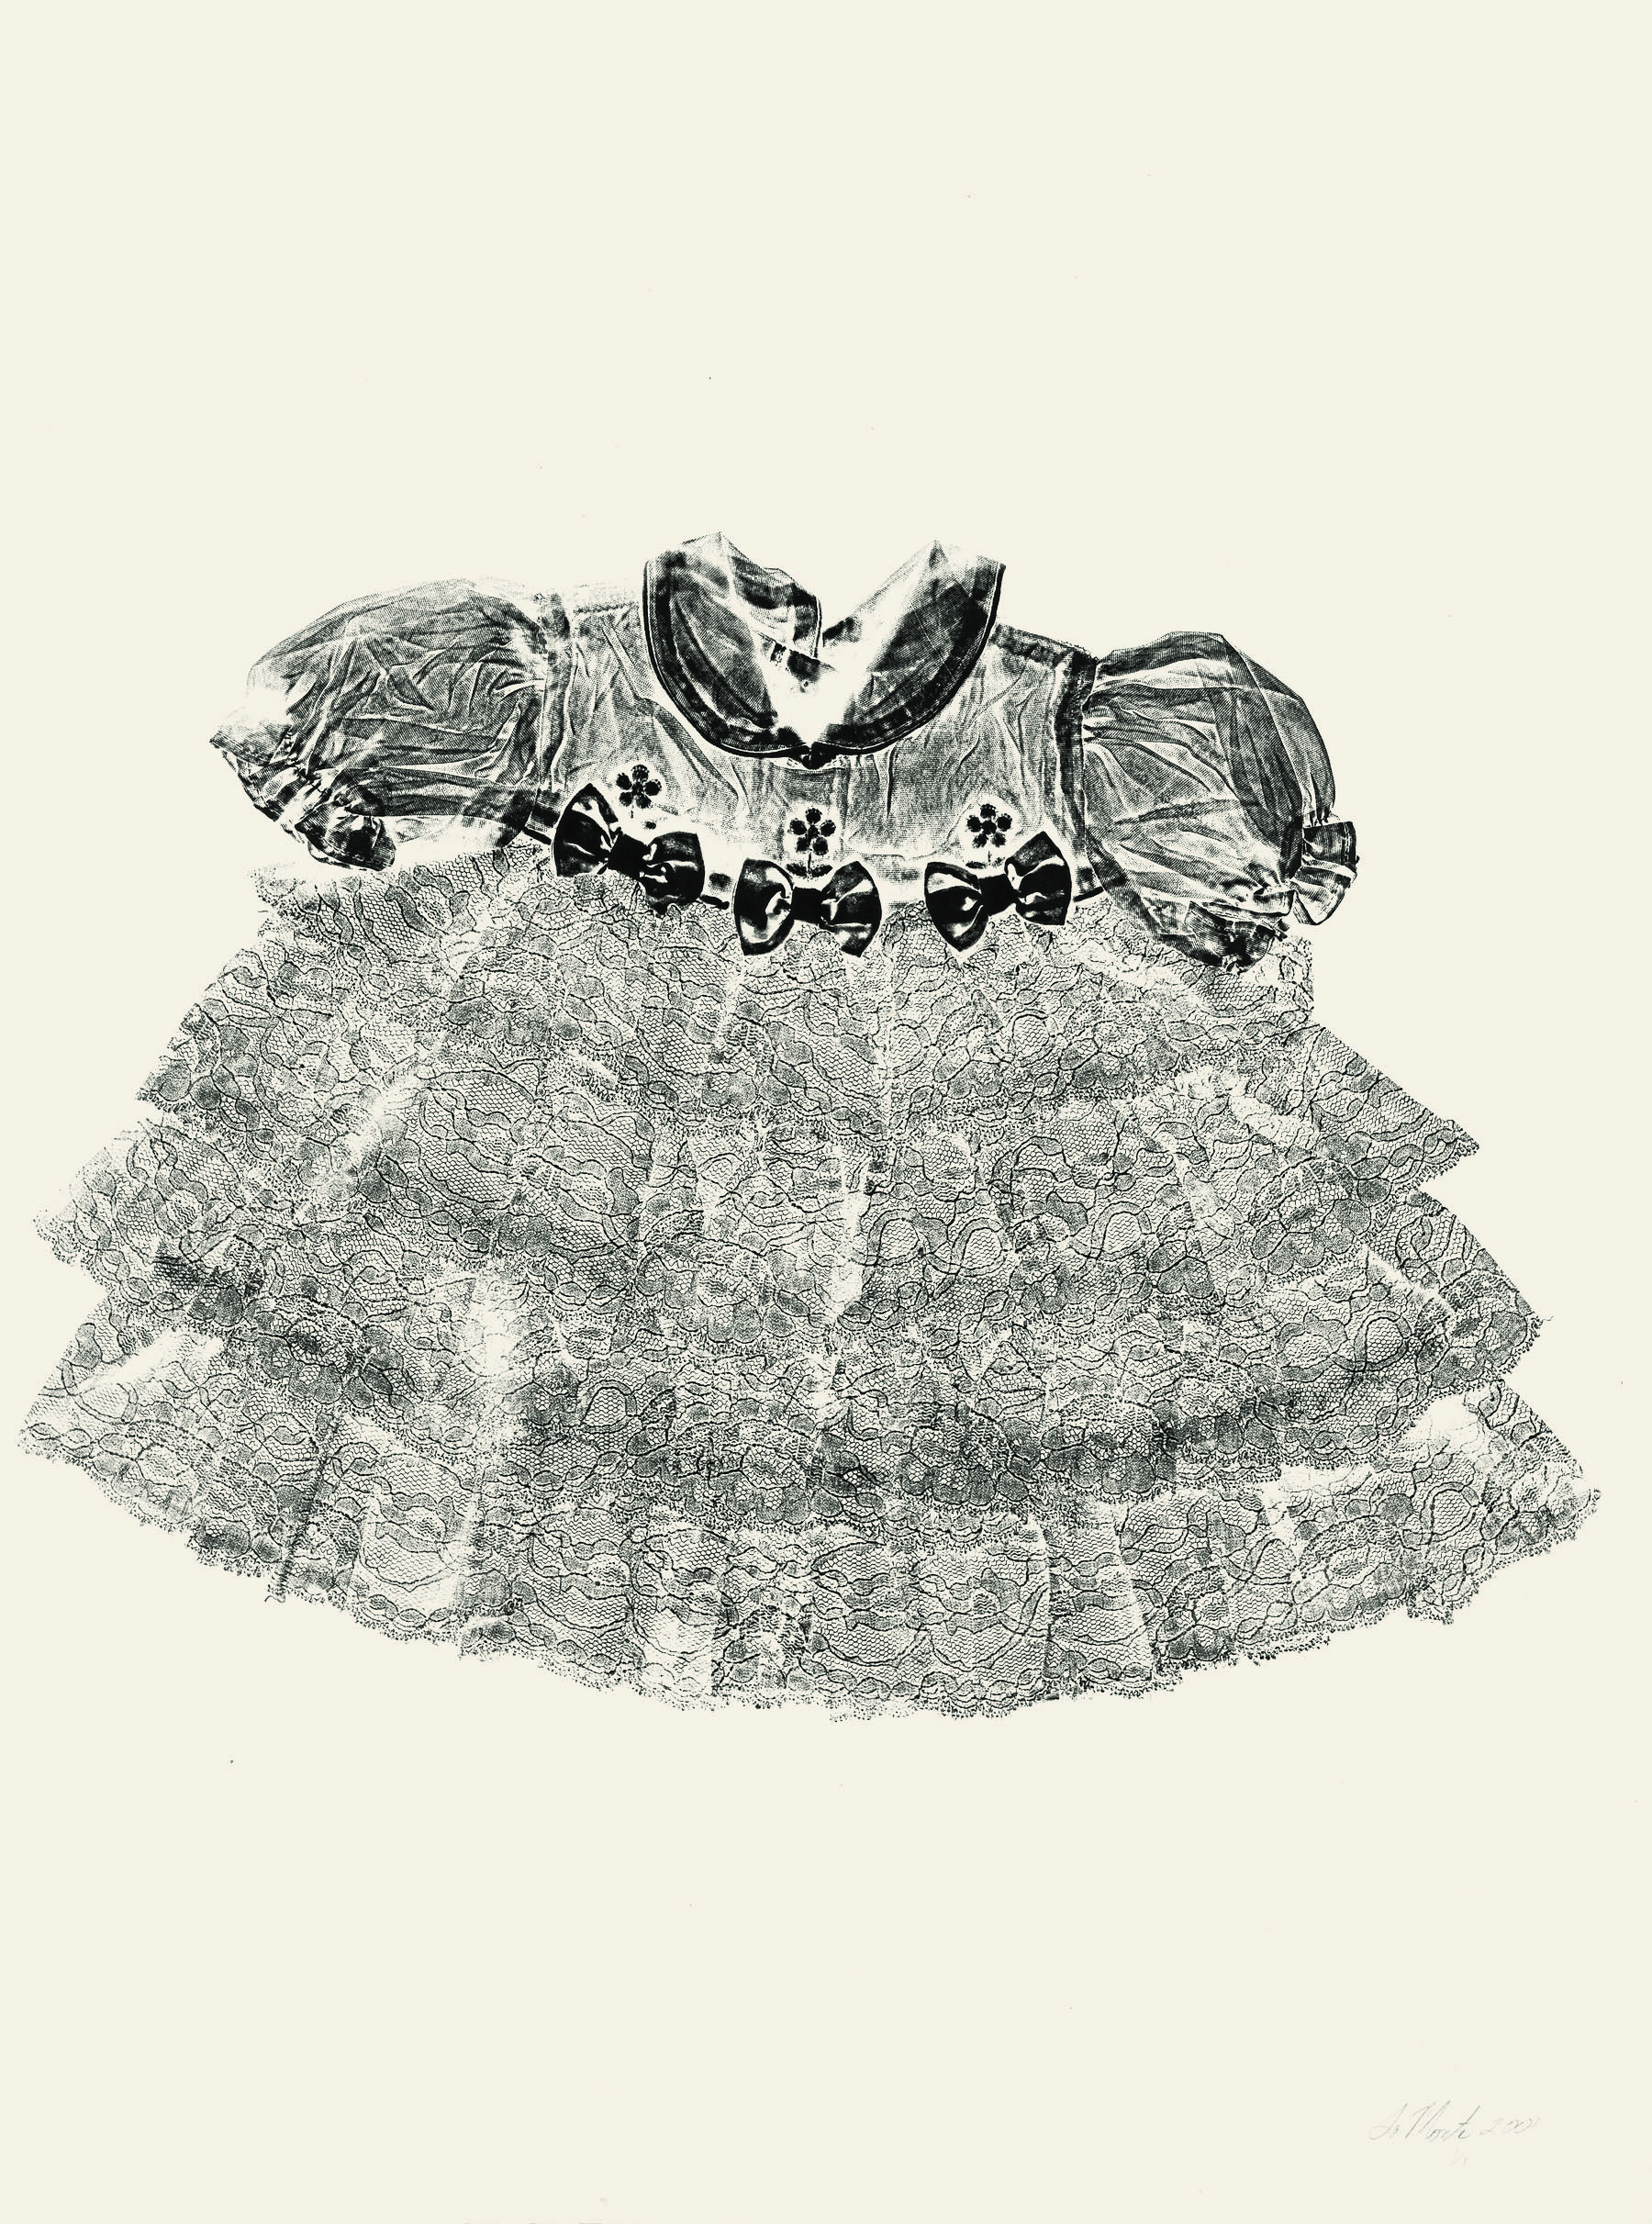 

											Karen LaMonte</b>

											<em>
												Sartoriotypes</em> 

											<h4>
																							</h4>

		                																																													<i>Impression Children's Dress,</i>  
																																								2001, 
																																								Sartoriotype. Monotype print on etching paper, 
																																								30 x 22 inches 
																								
		                				